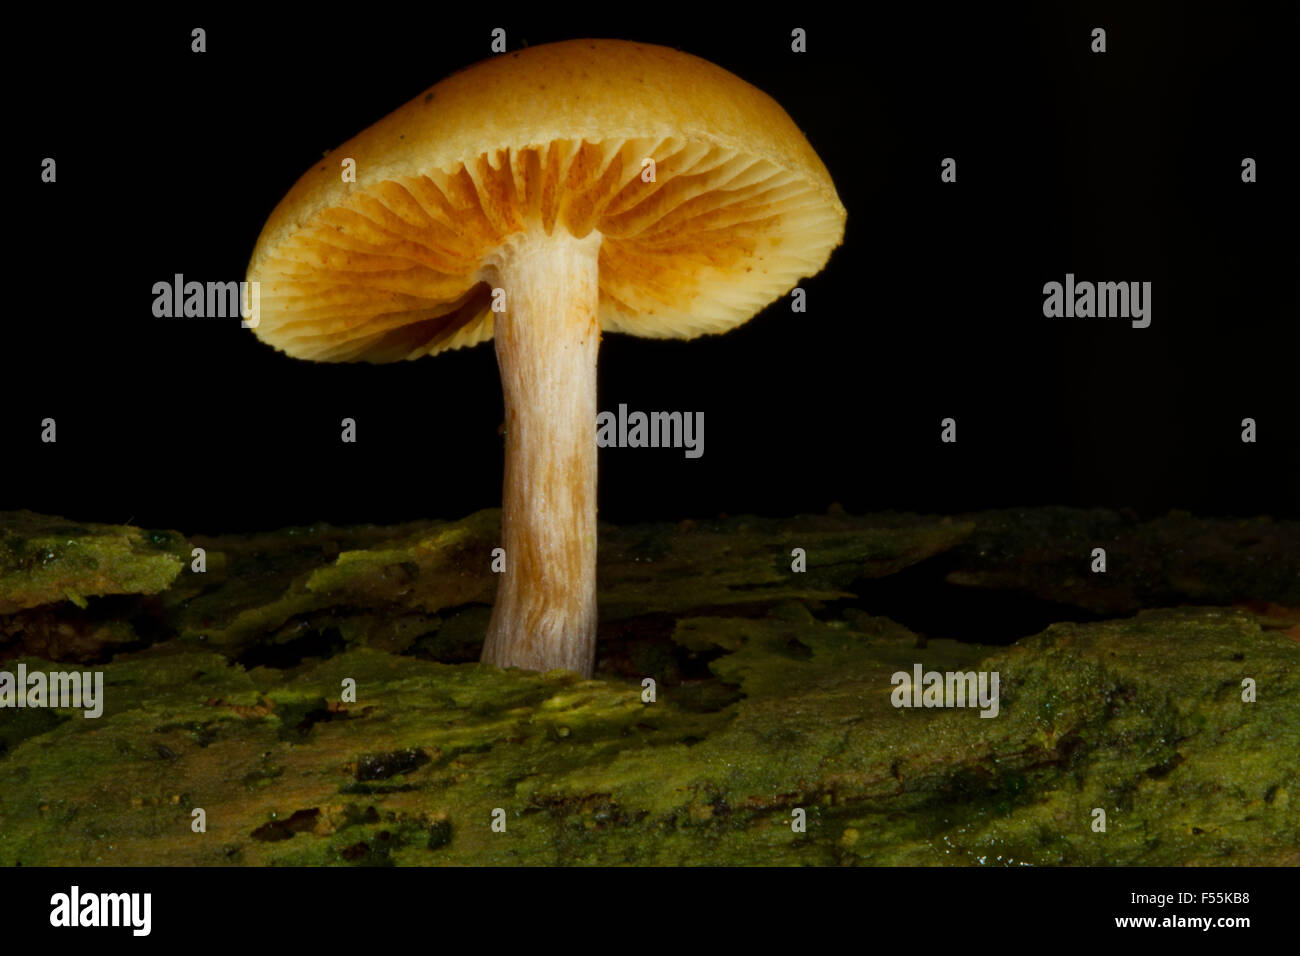 Tiny mushroom, probably Psathyrella piluliformis, growing on rotting wood Stock Photo